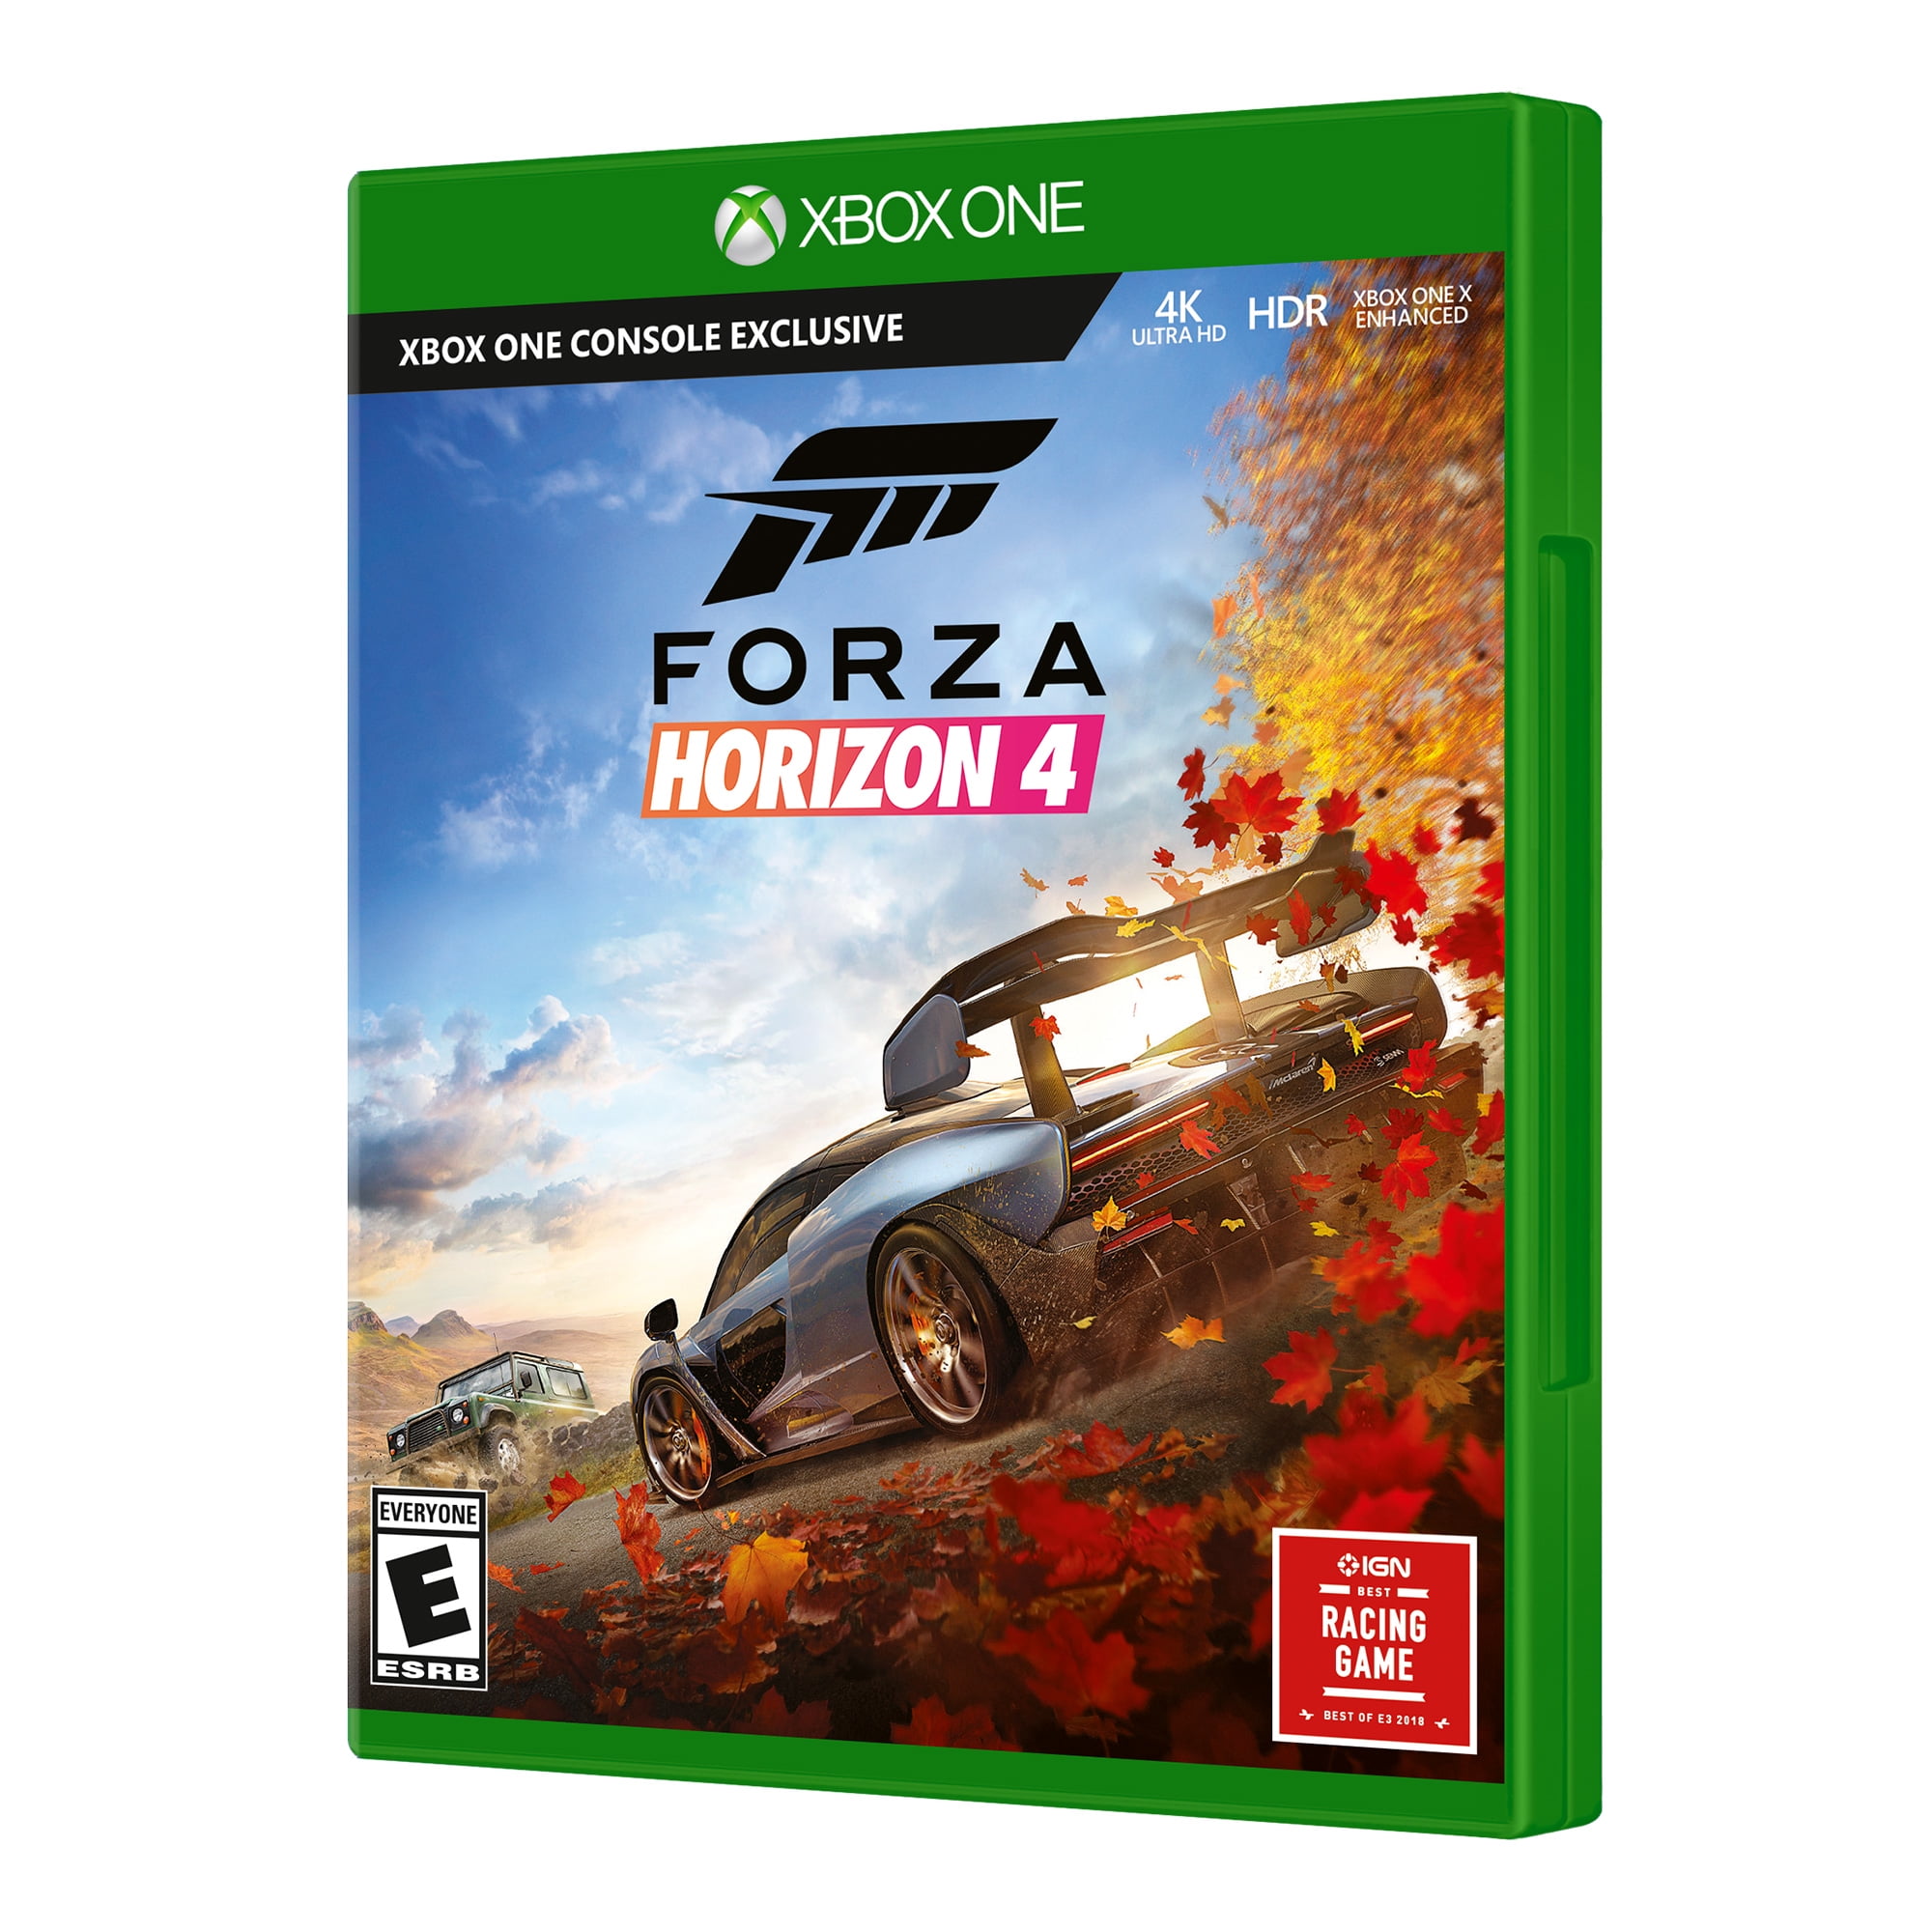 Verval hengel jongen Forza Horizon 4, Microsoft, Xbox One, 889842392357 - Walmart.com